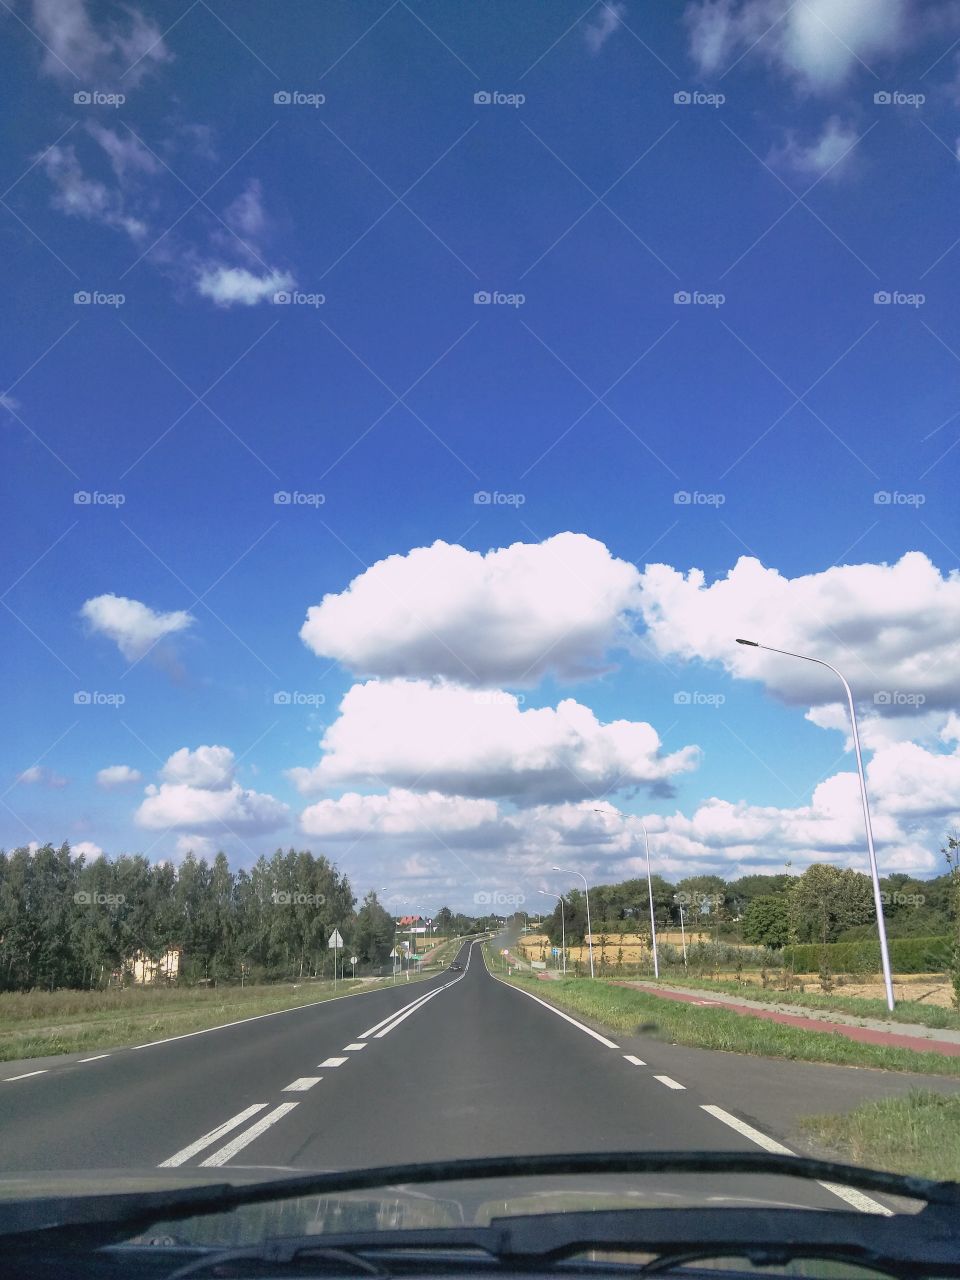 #onway #car #view #clouds